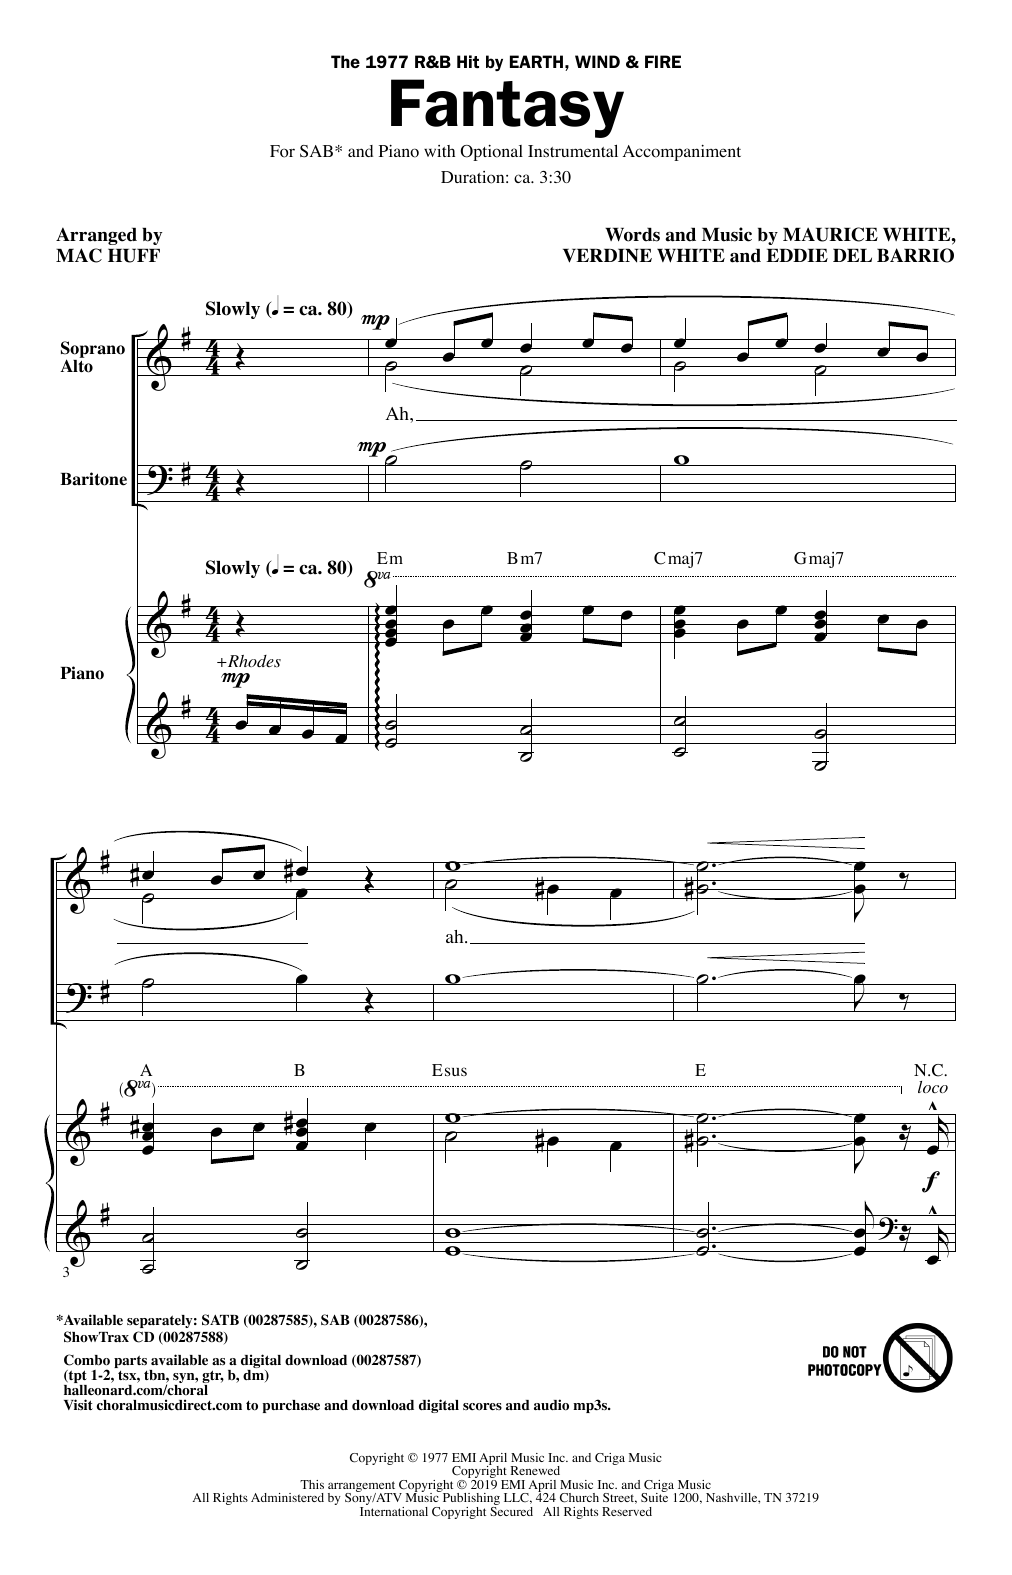 Earth, Wind & Fire Fantasy (arr. Mac Huff) Sheet Music Notes & Chords for SAB Choir - Download or Print PDF